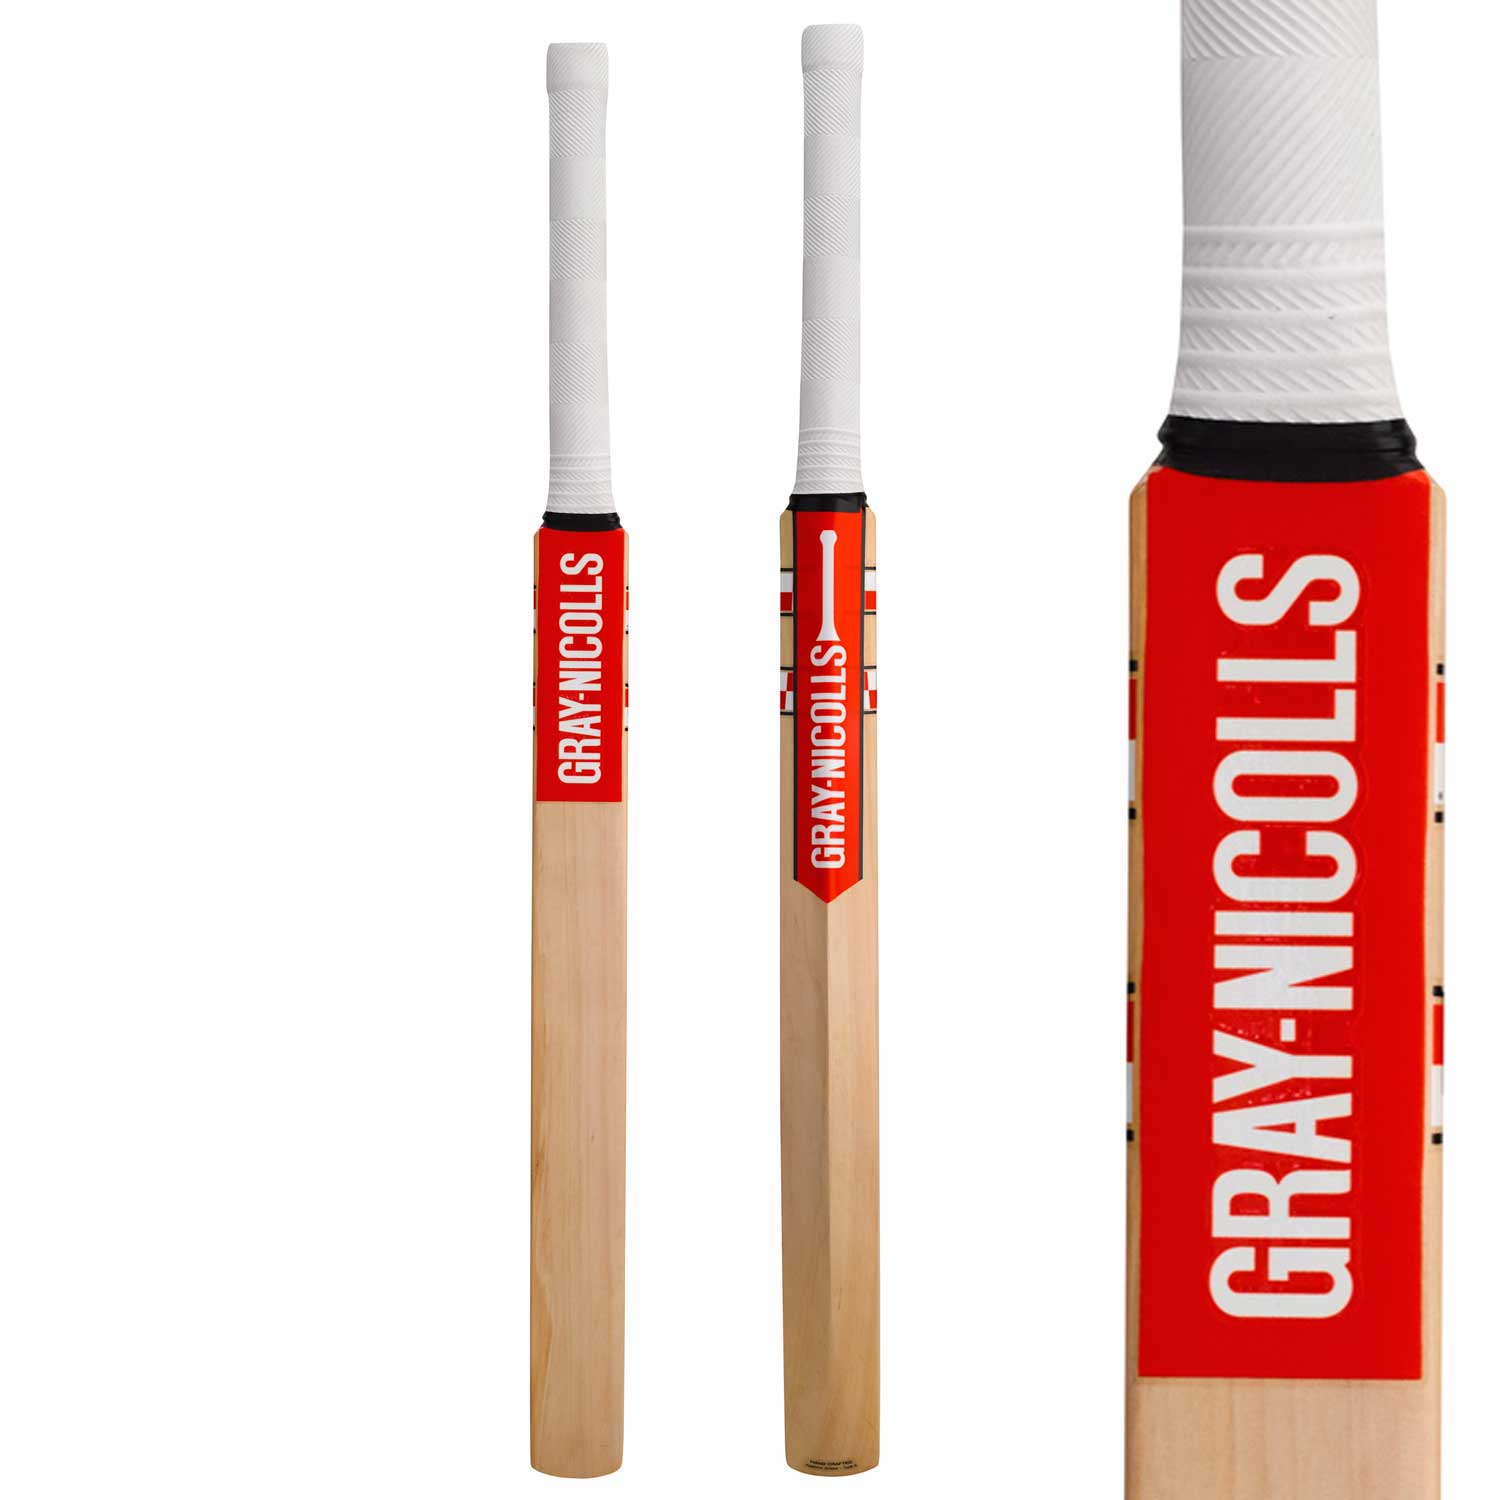 Gray-Nicolls Technique 55 Training Cricket Bat